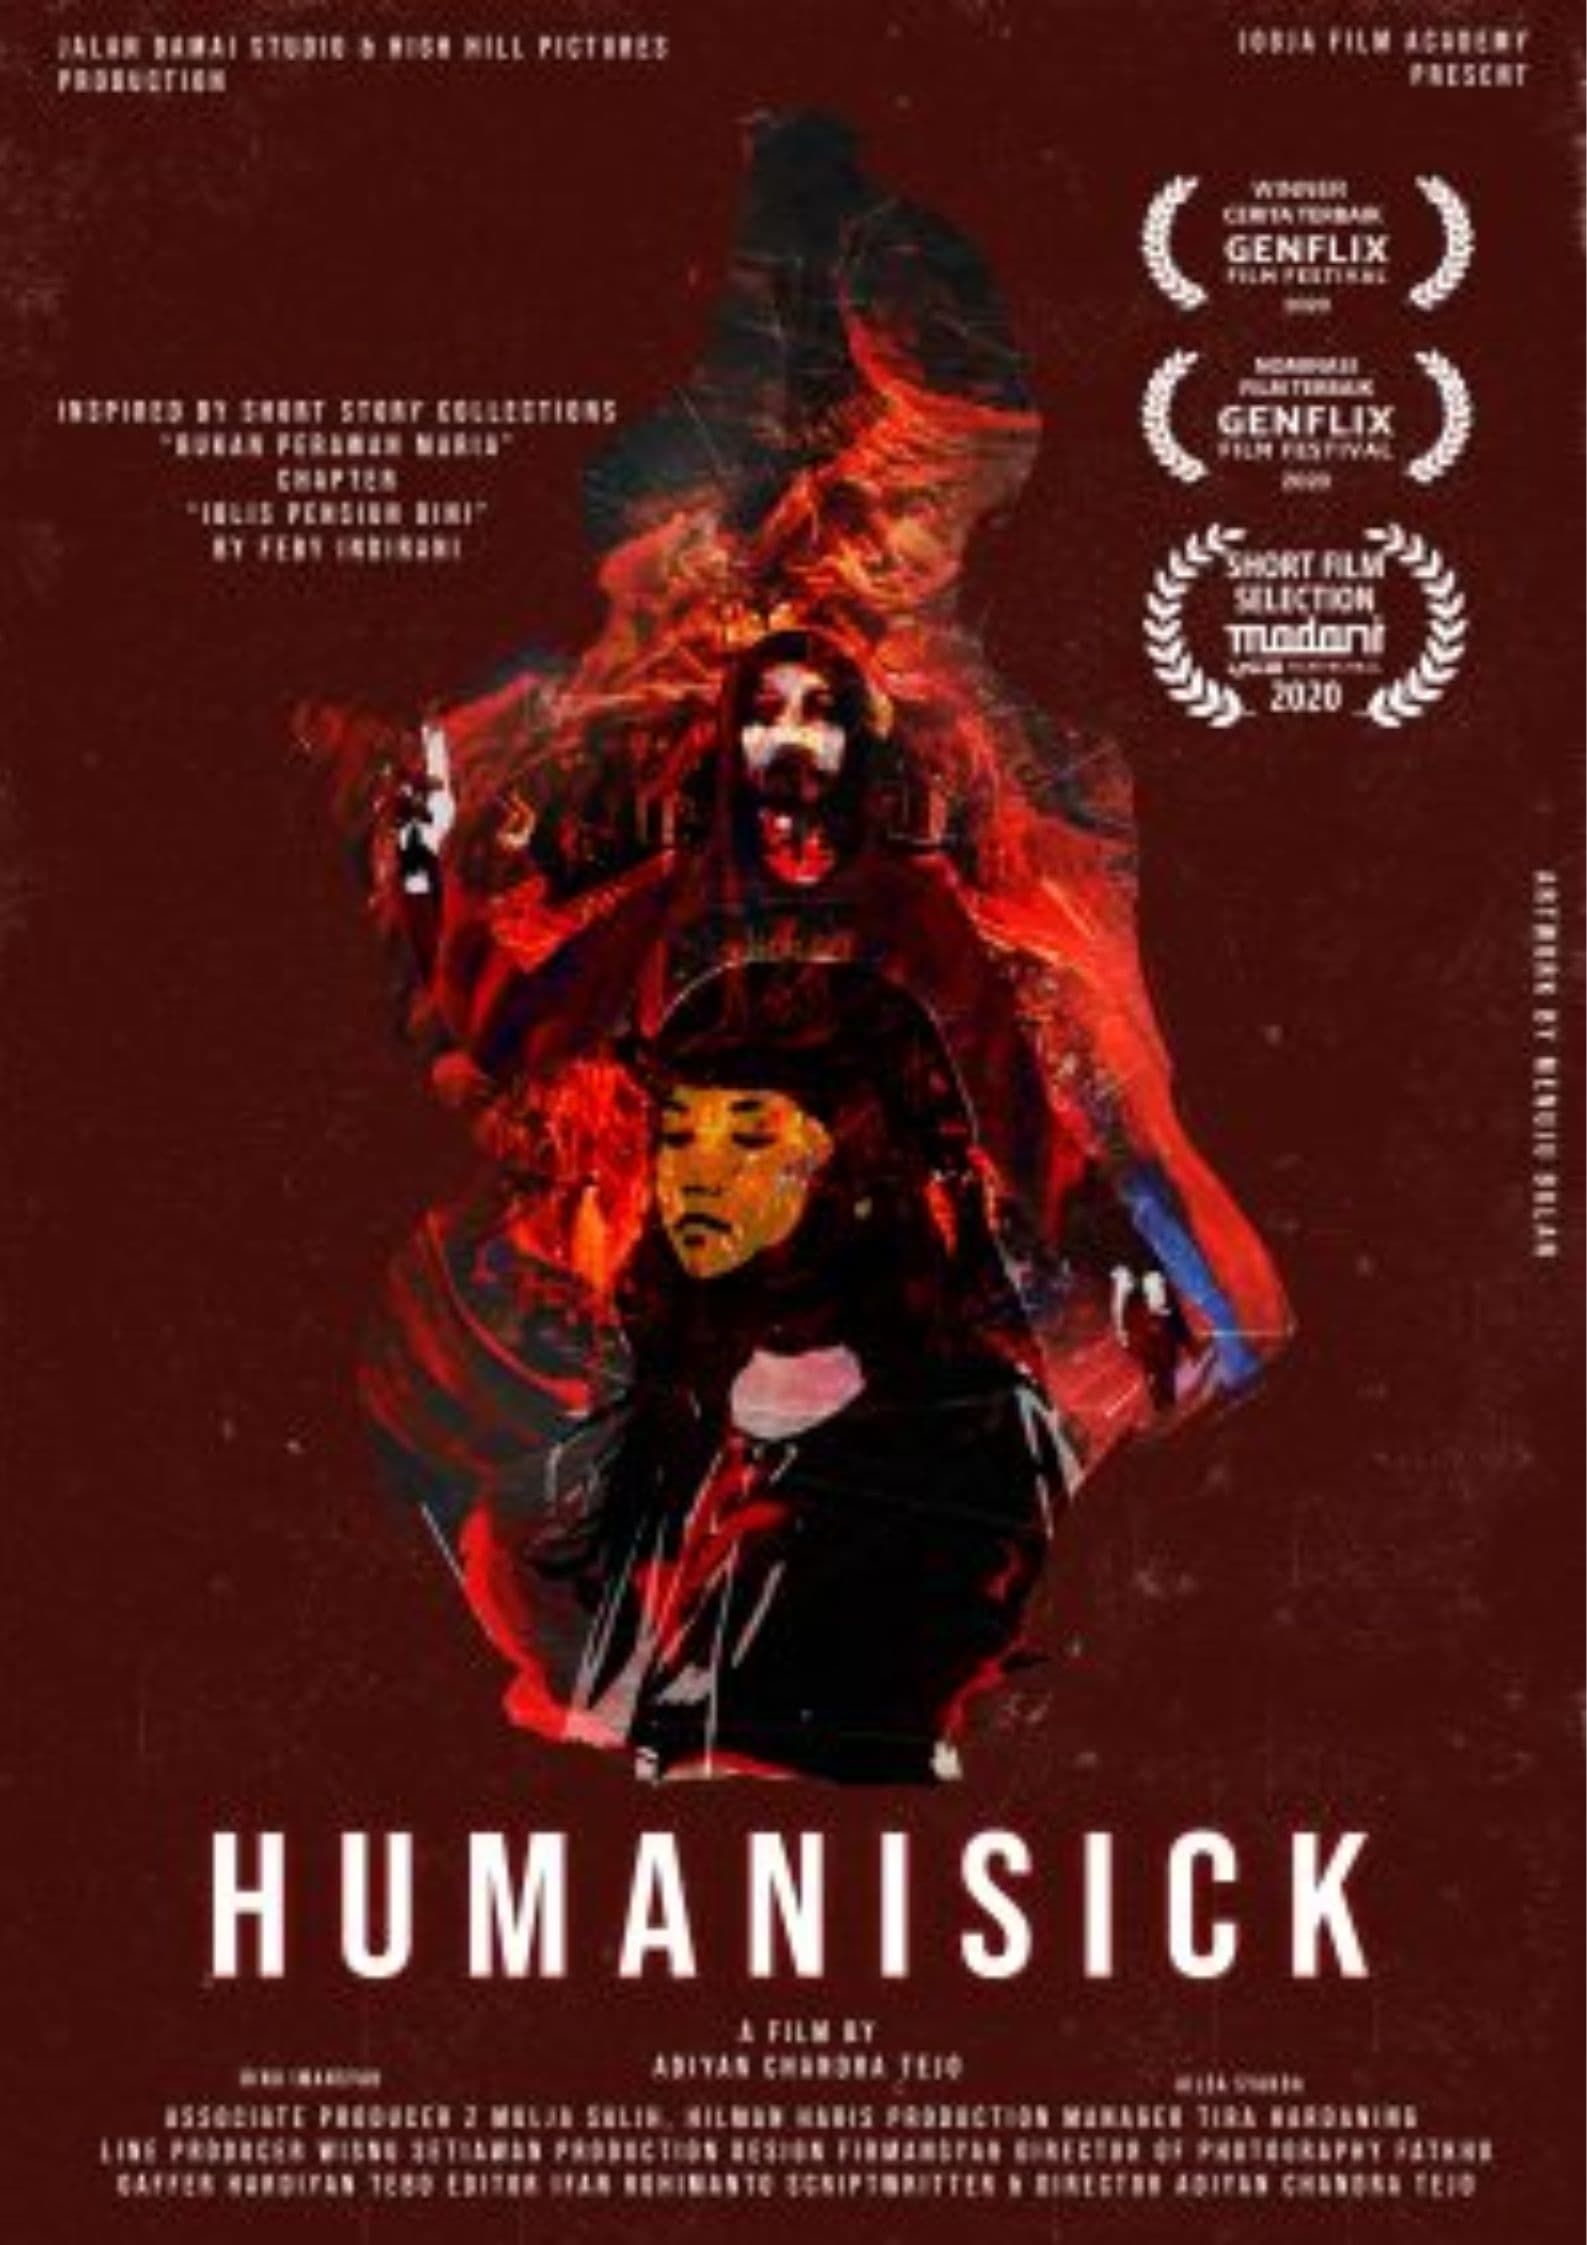 Humanisick